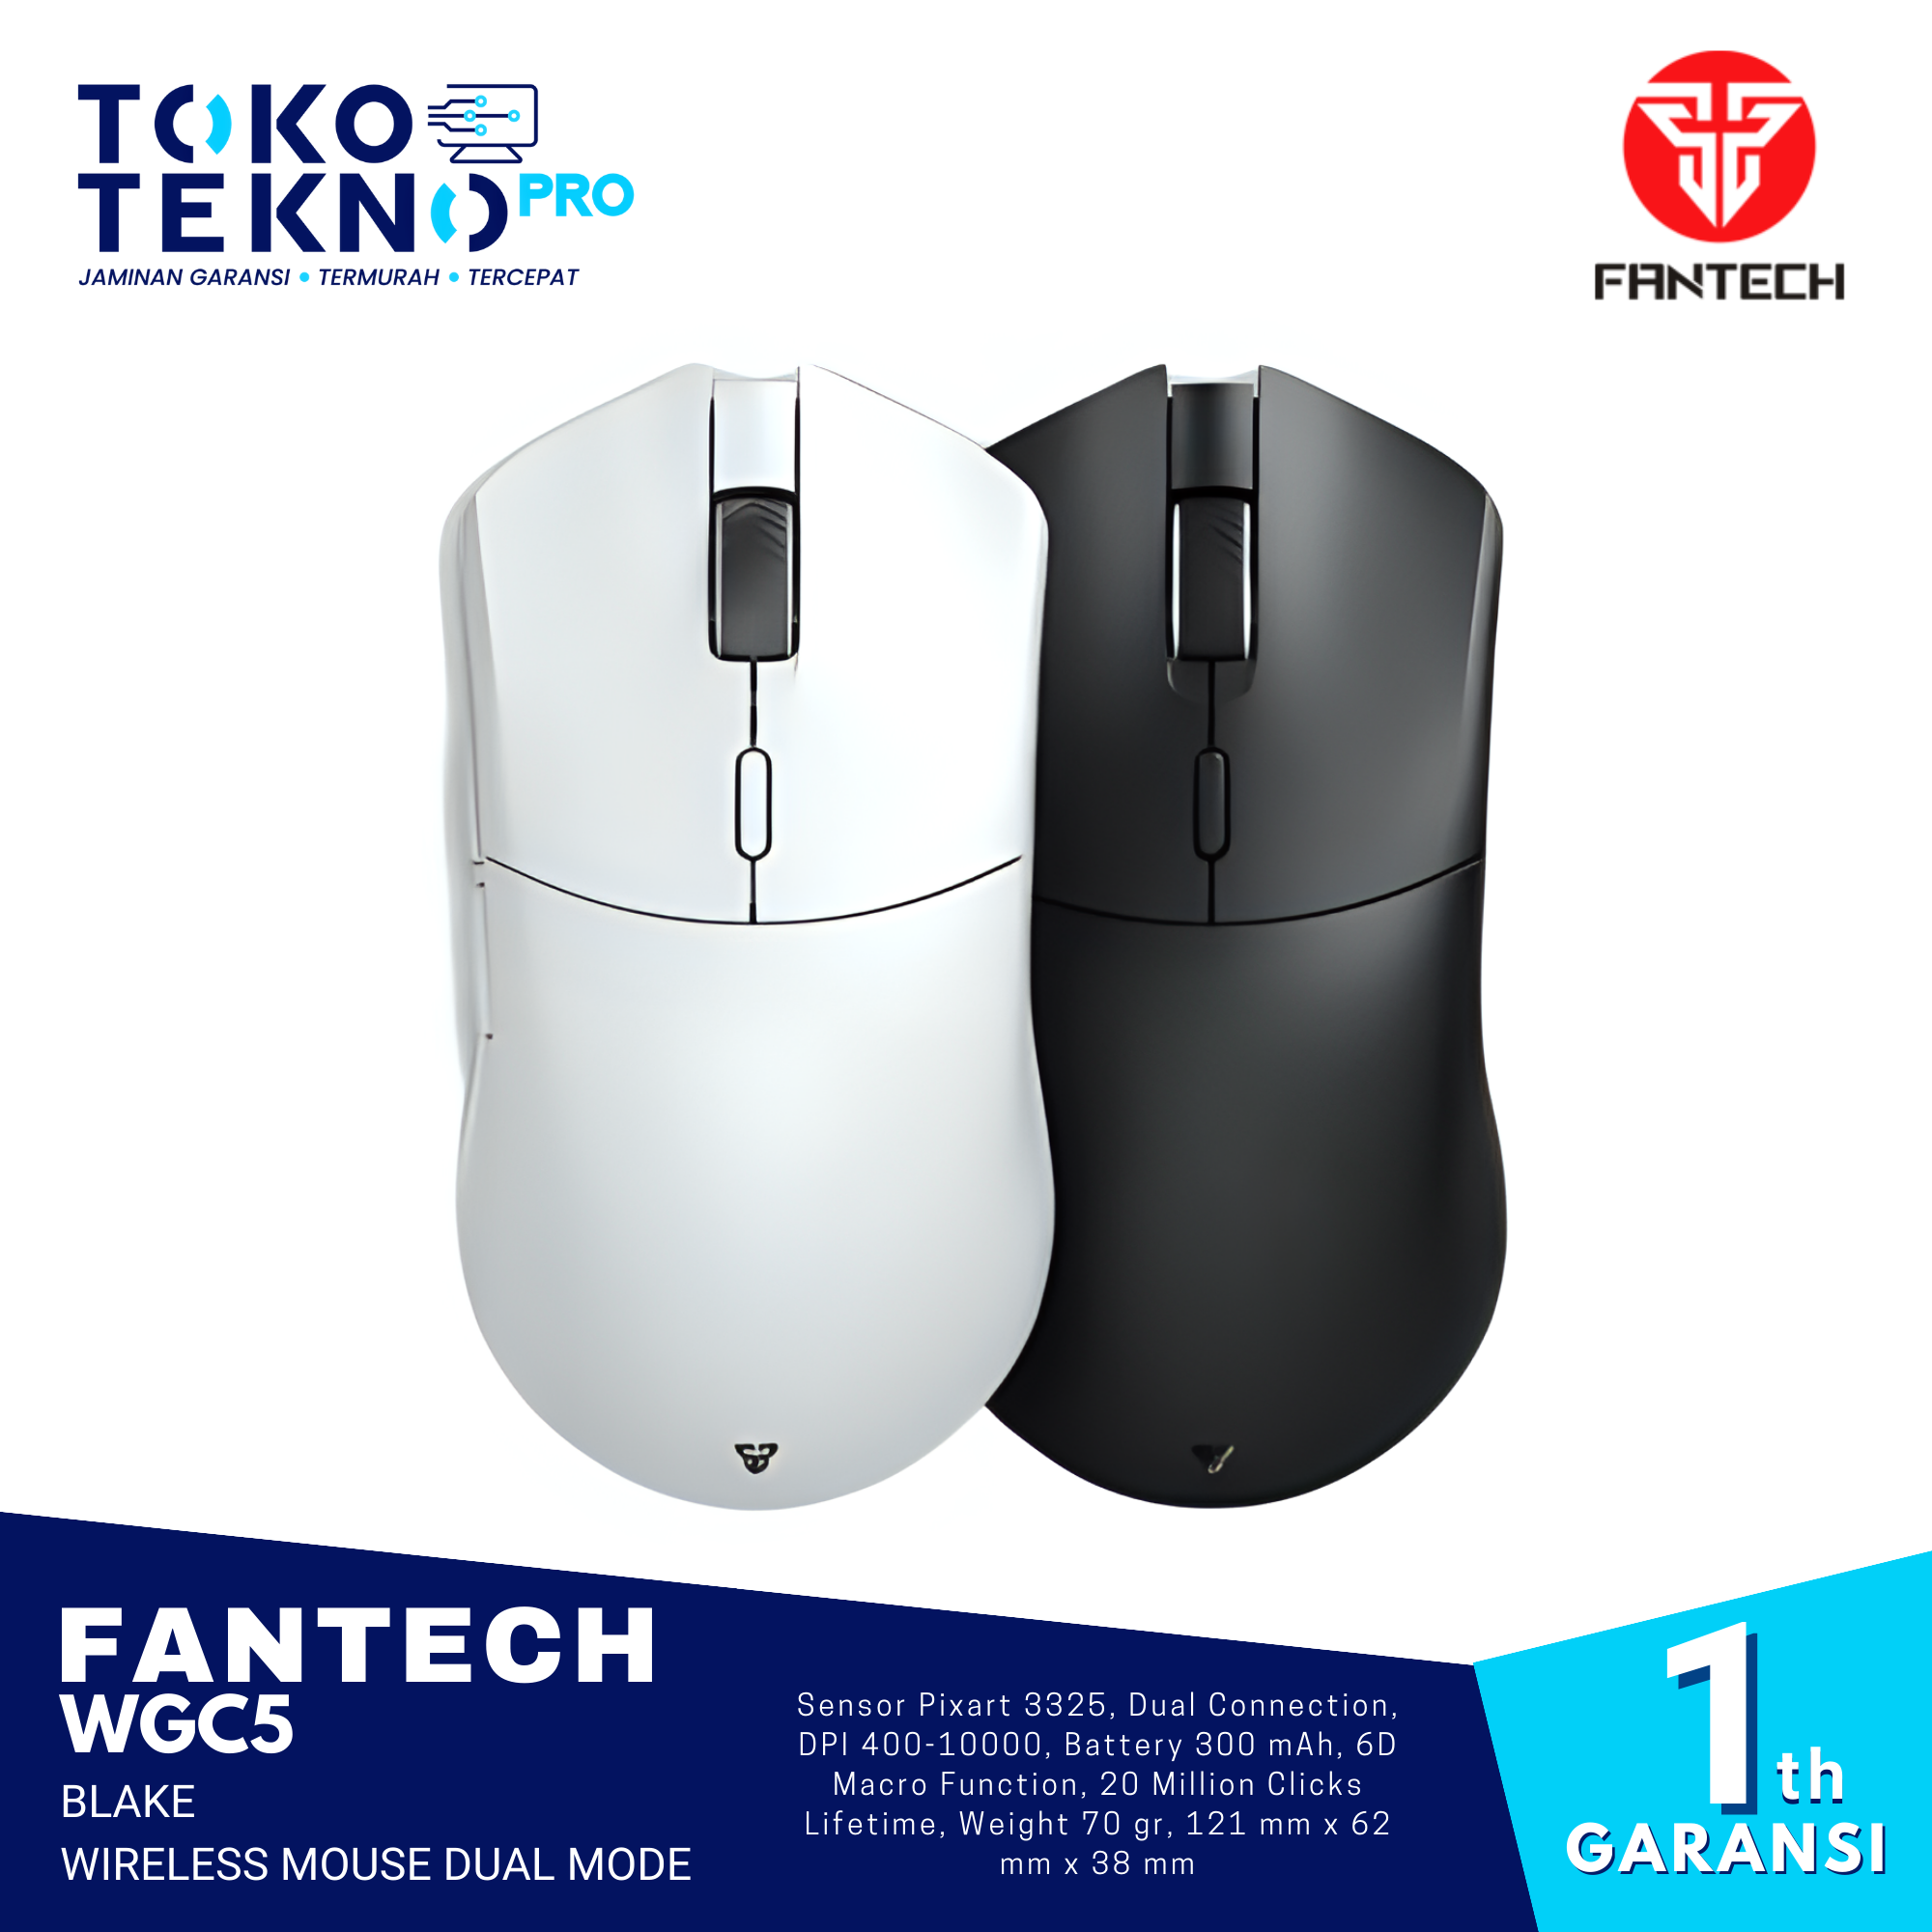 Fantech WGC5 Wireless Mouse Dual Mode